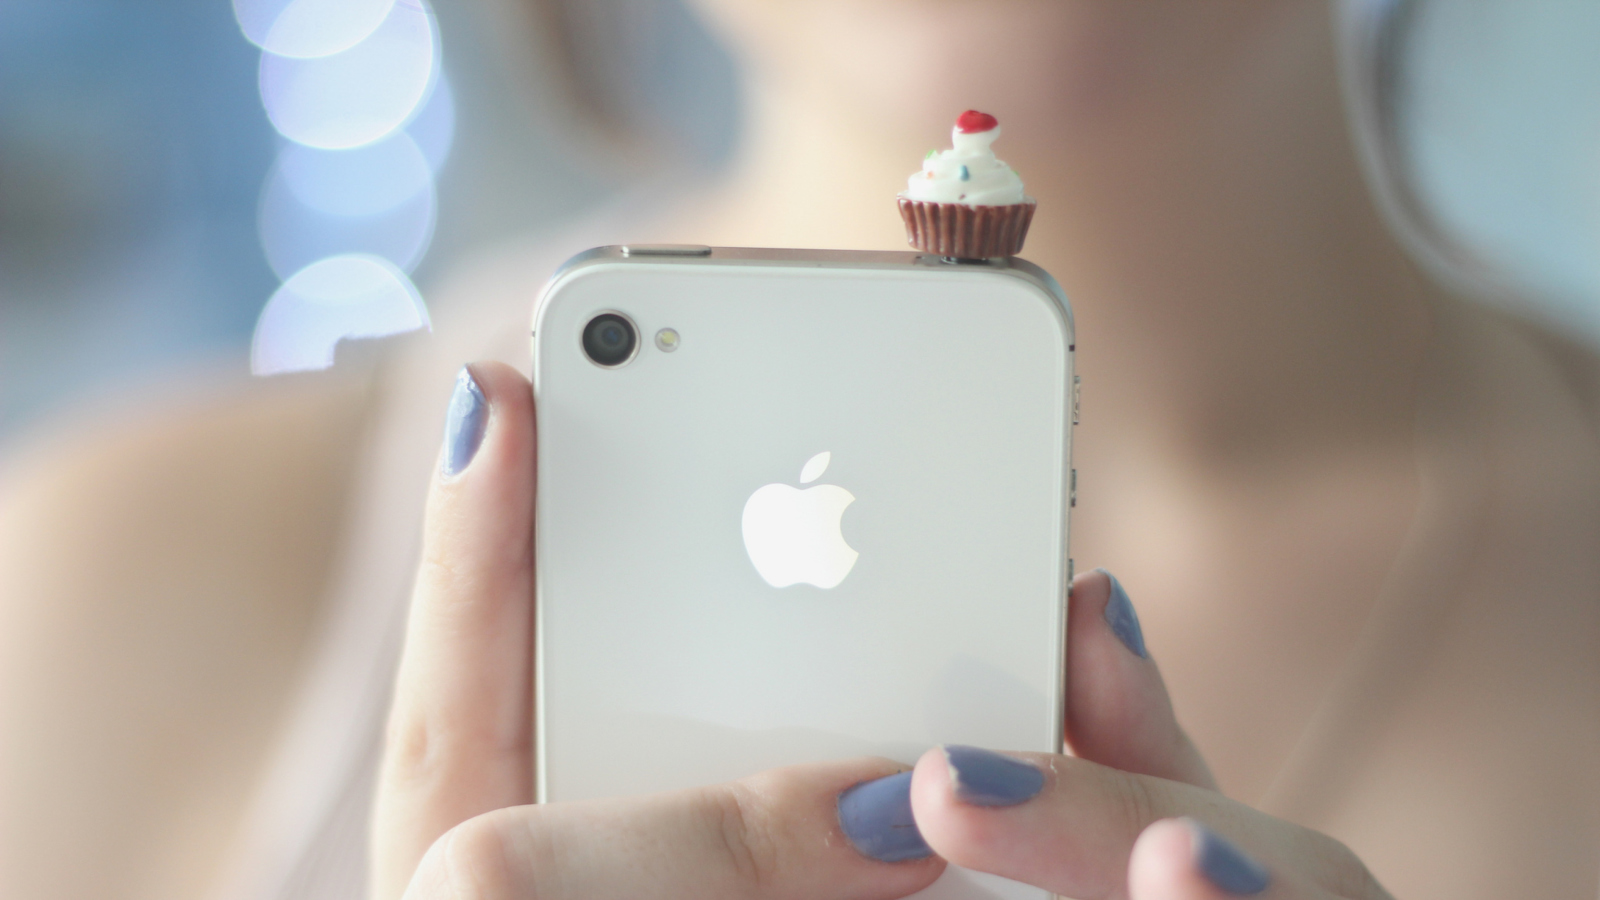 Cupcake Iphone wallpaper 1600x900